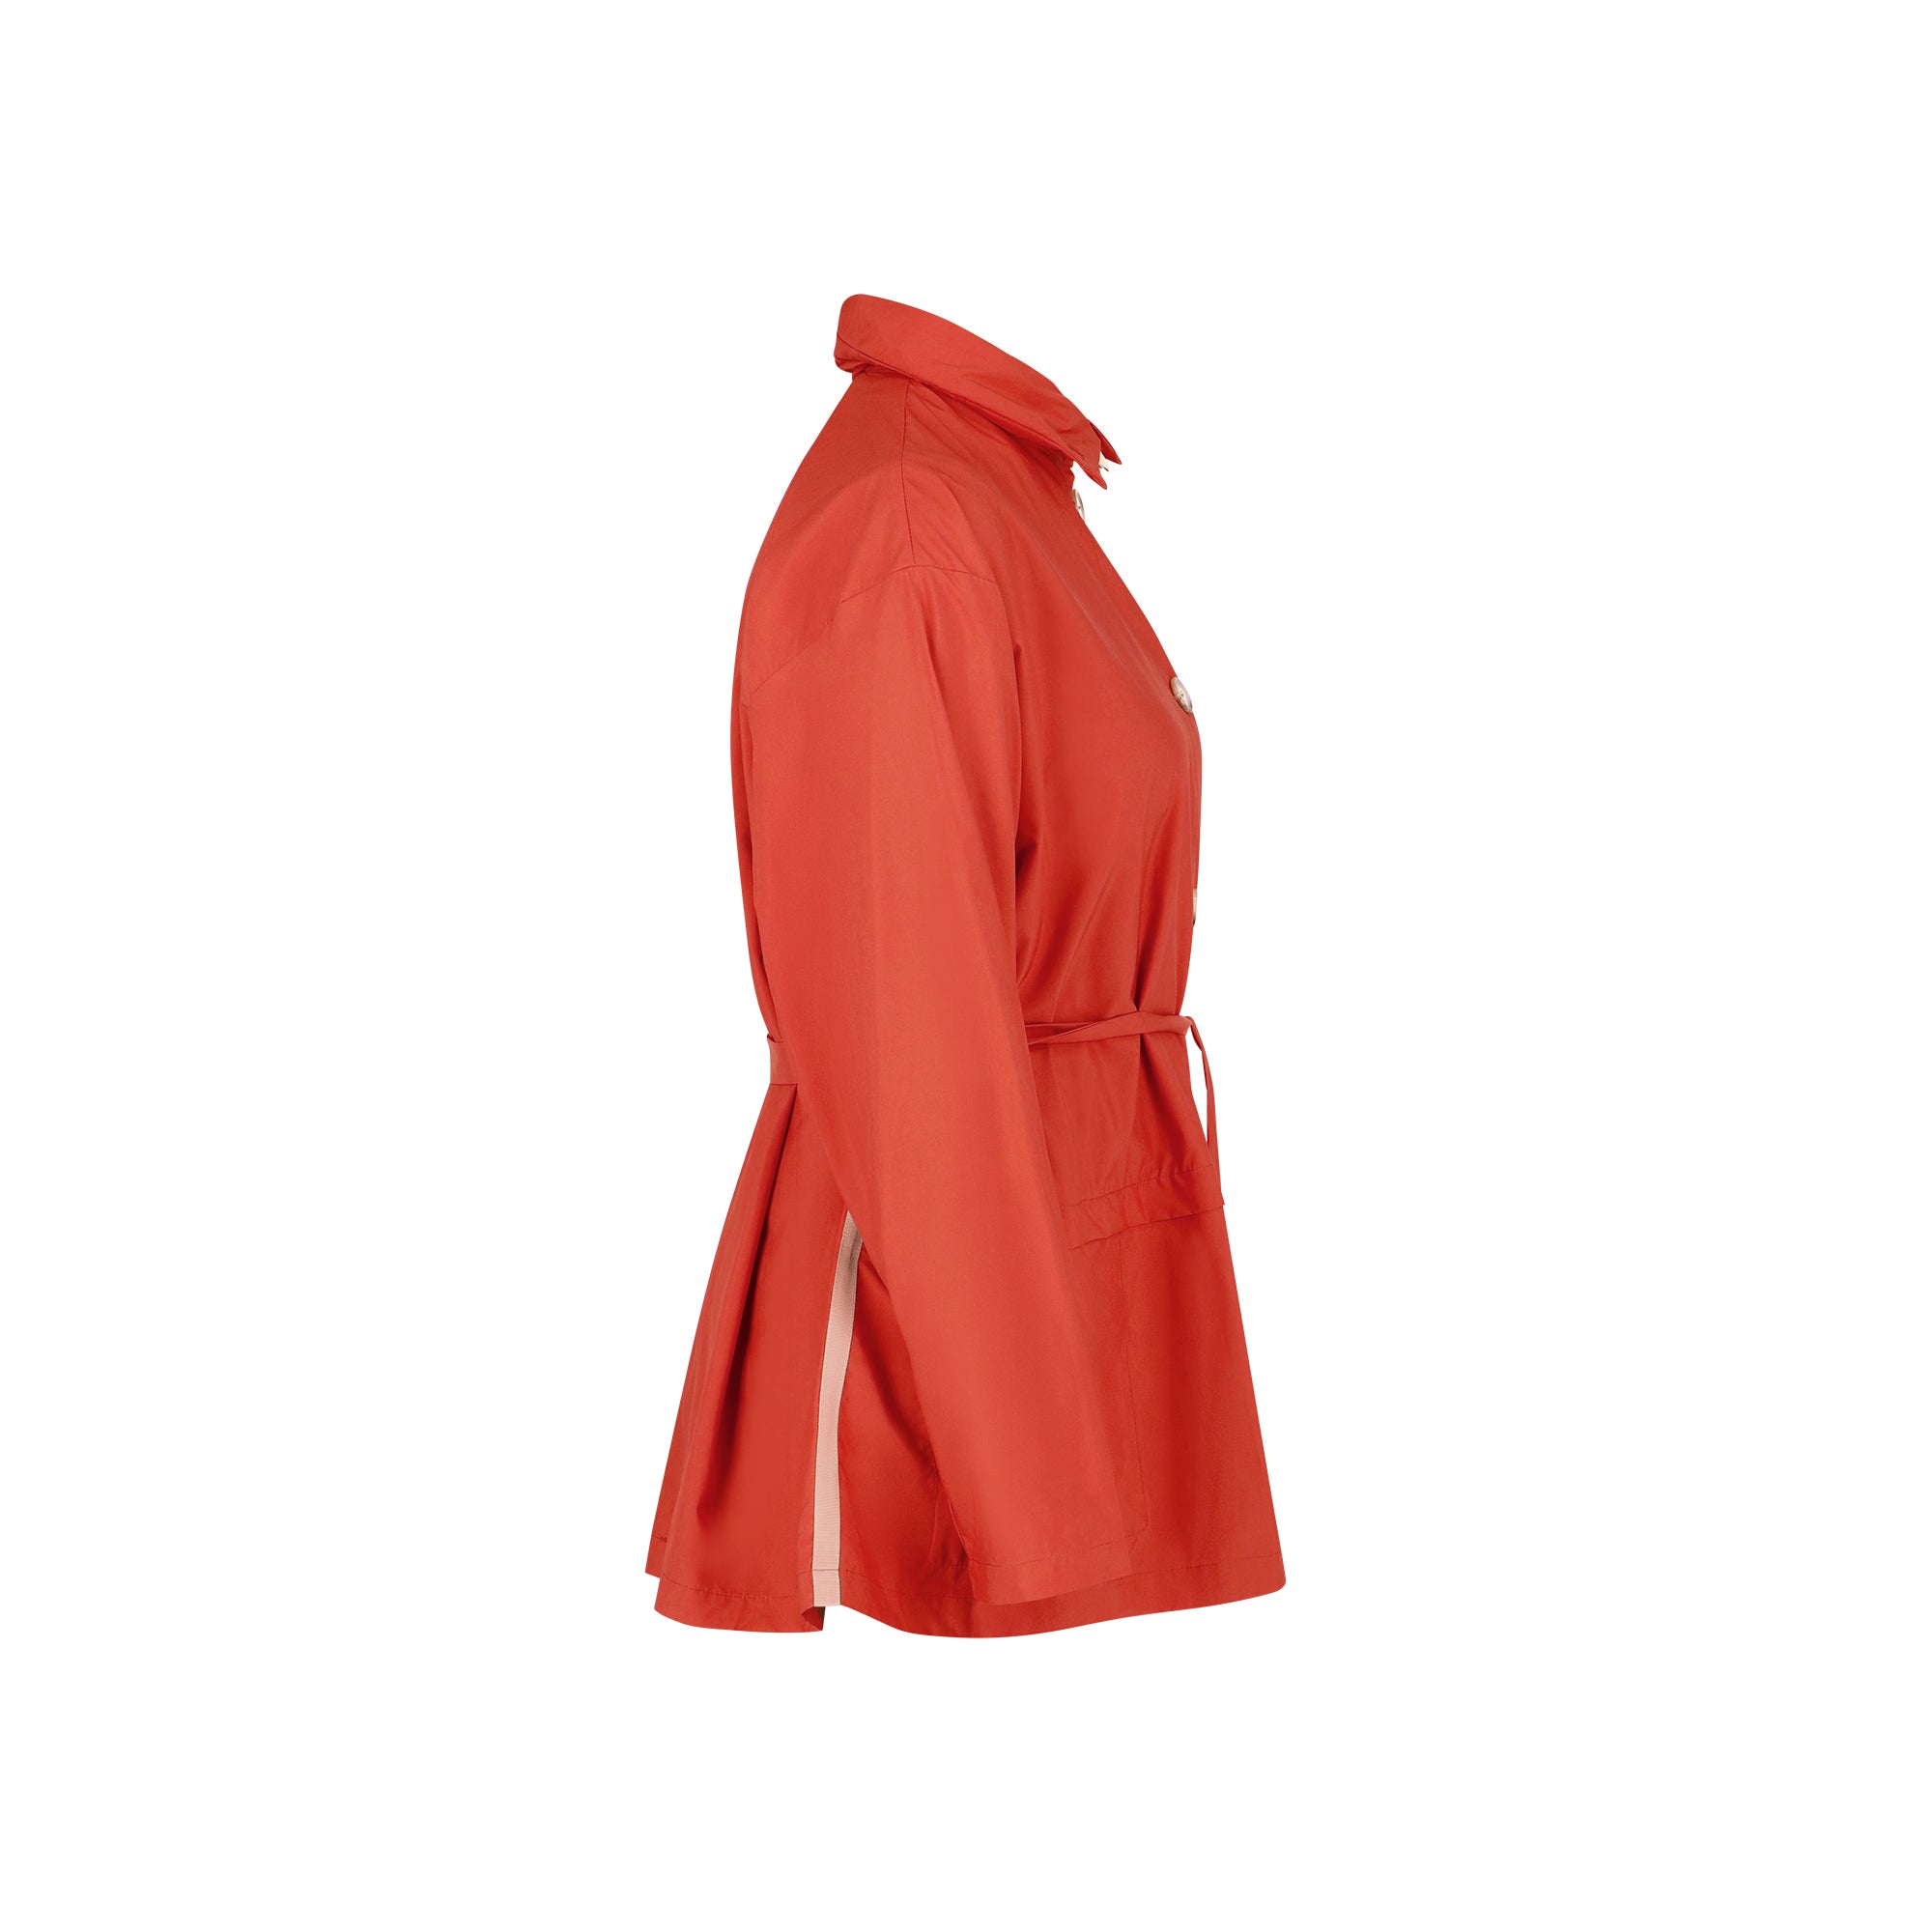 Bise raincoat - Orange color - side view